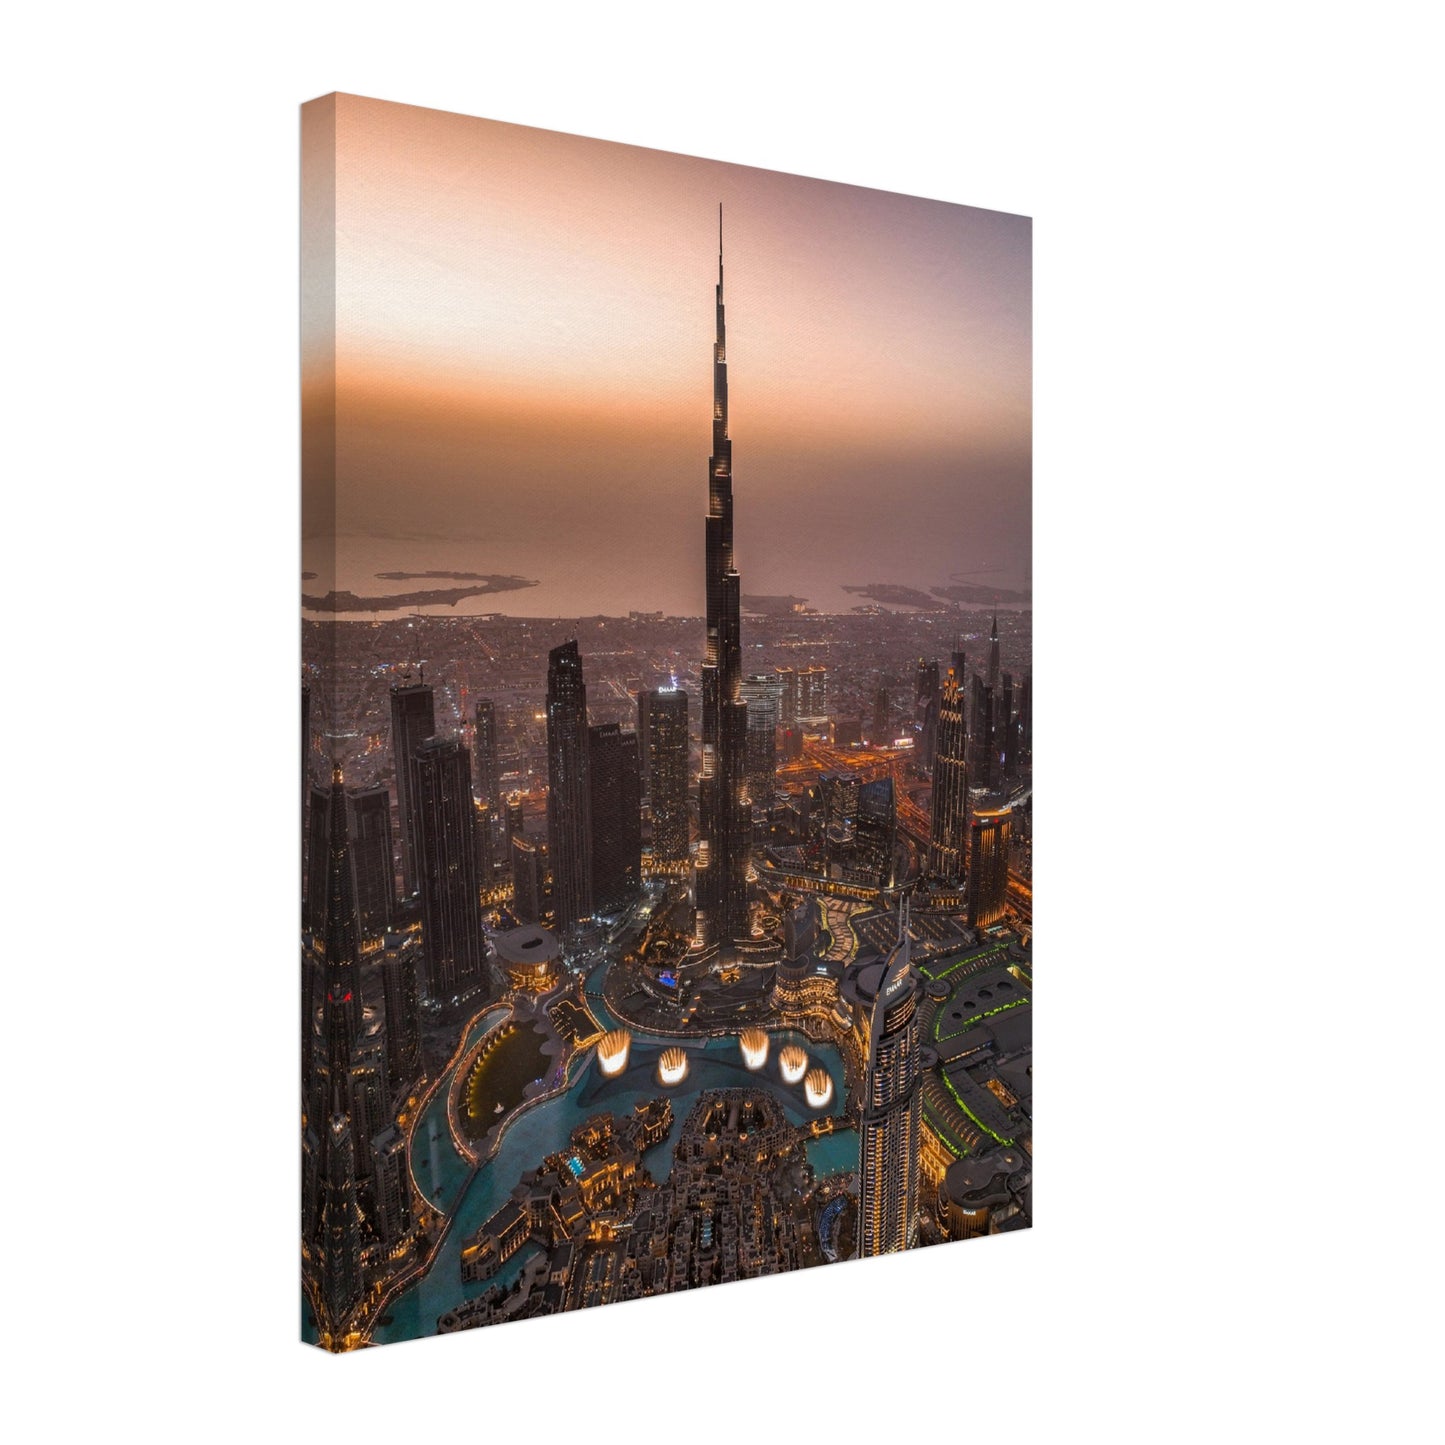 Dubai Burj Khalifa Sunset Canvas